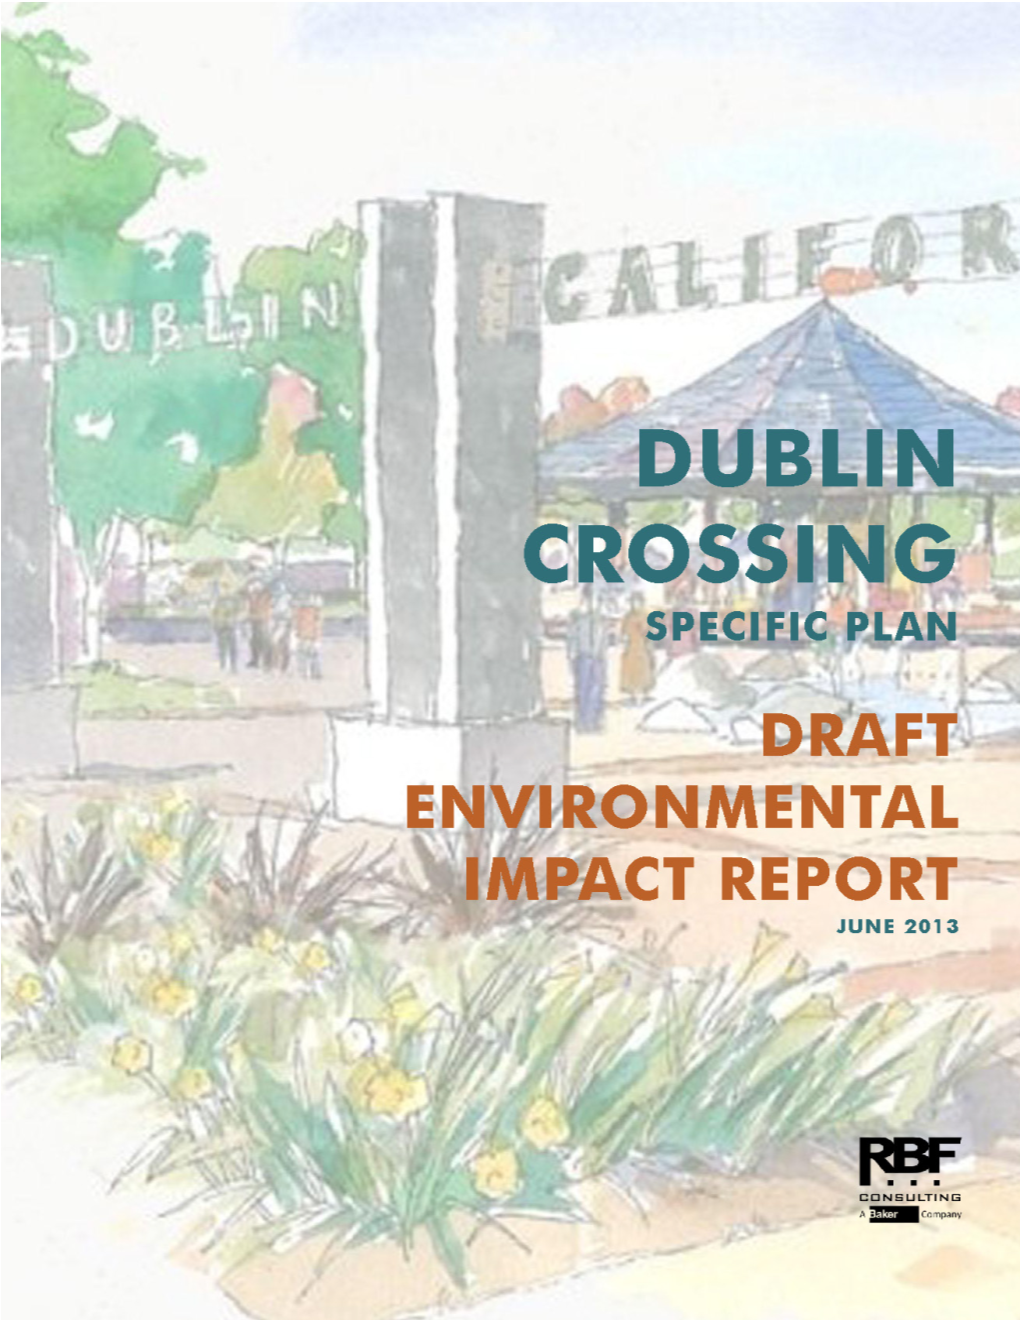 DUBLIN CROSSING SPECIFIC PLAN Draft Environmental Impact Report